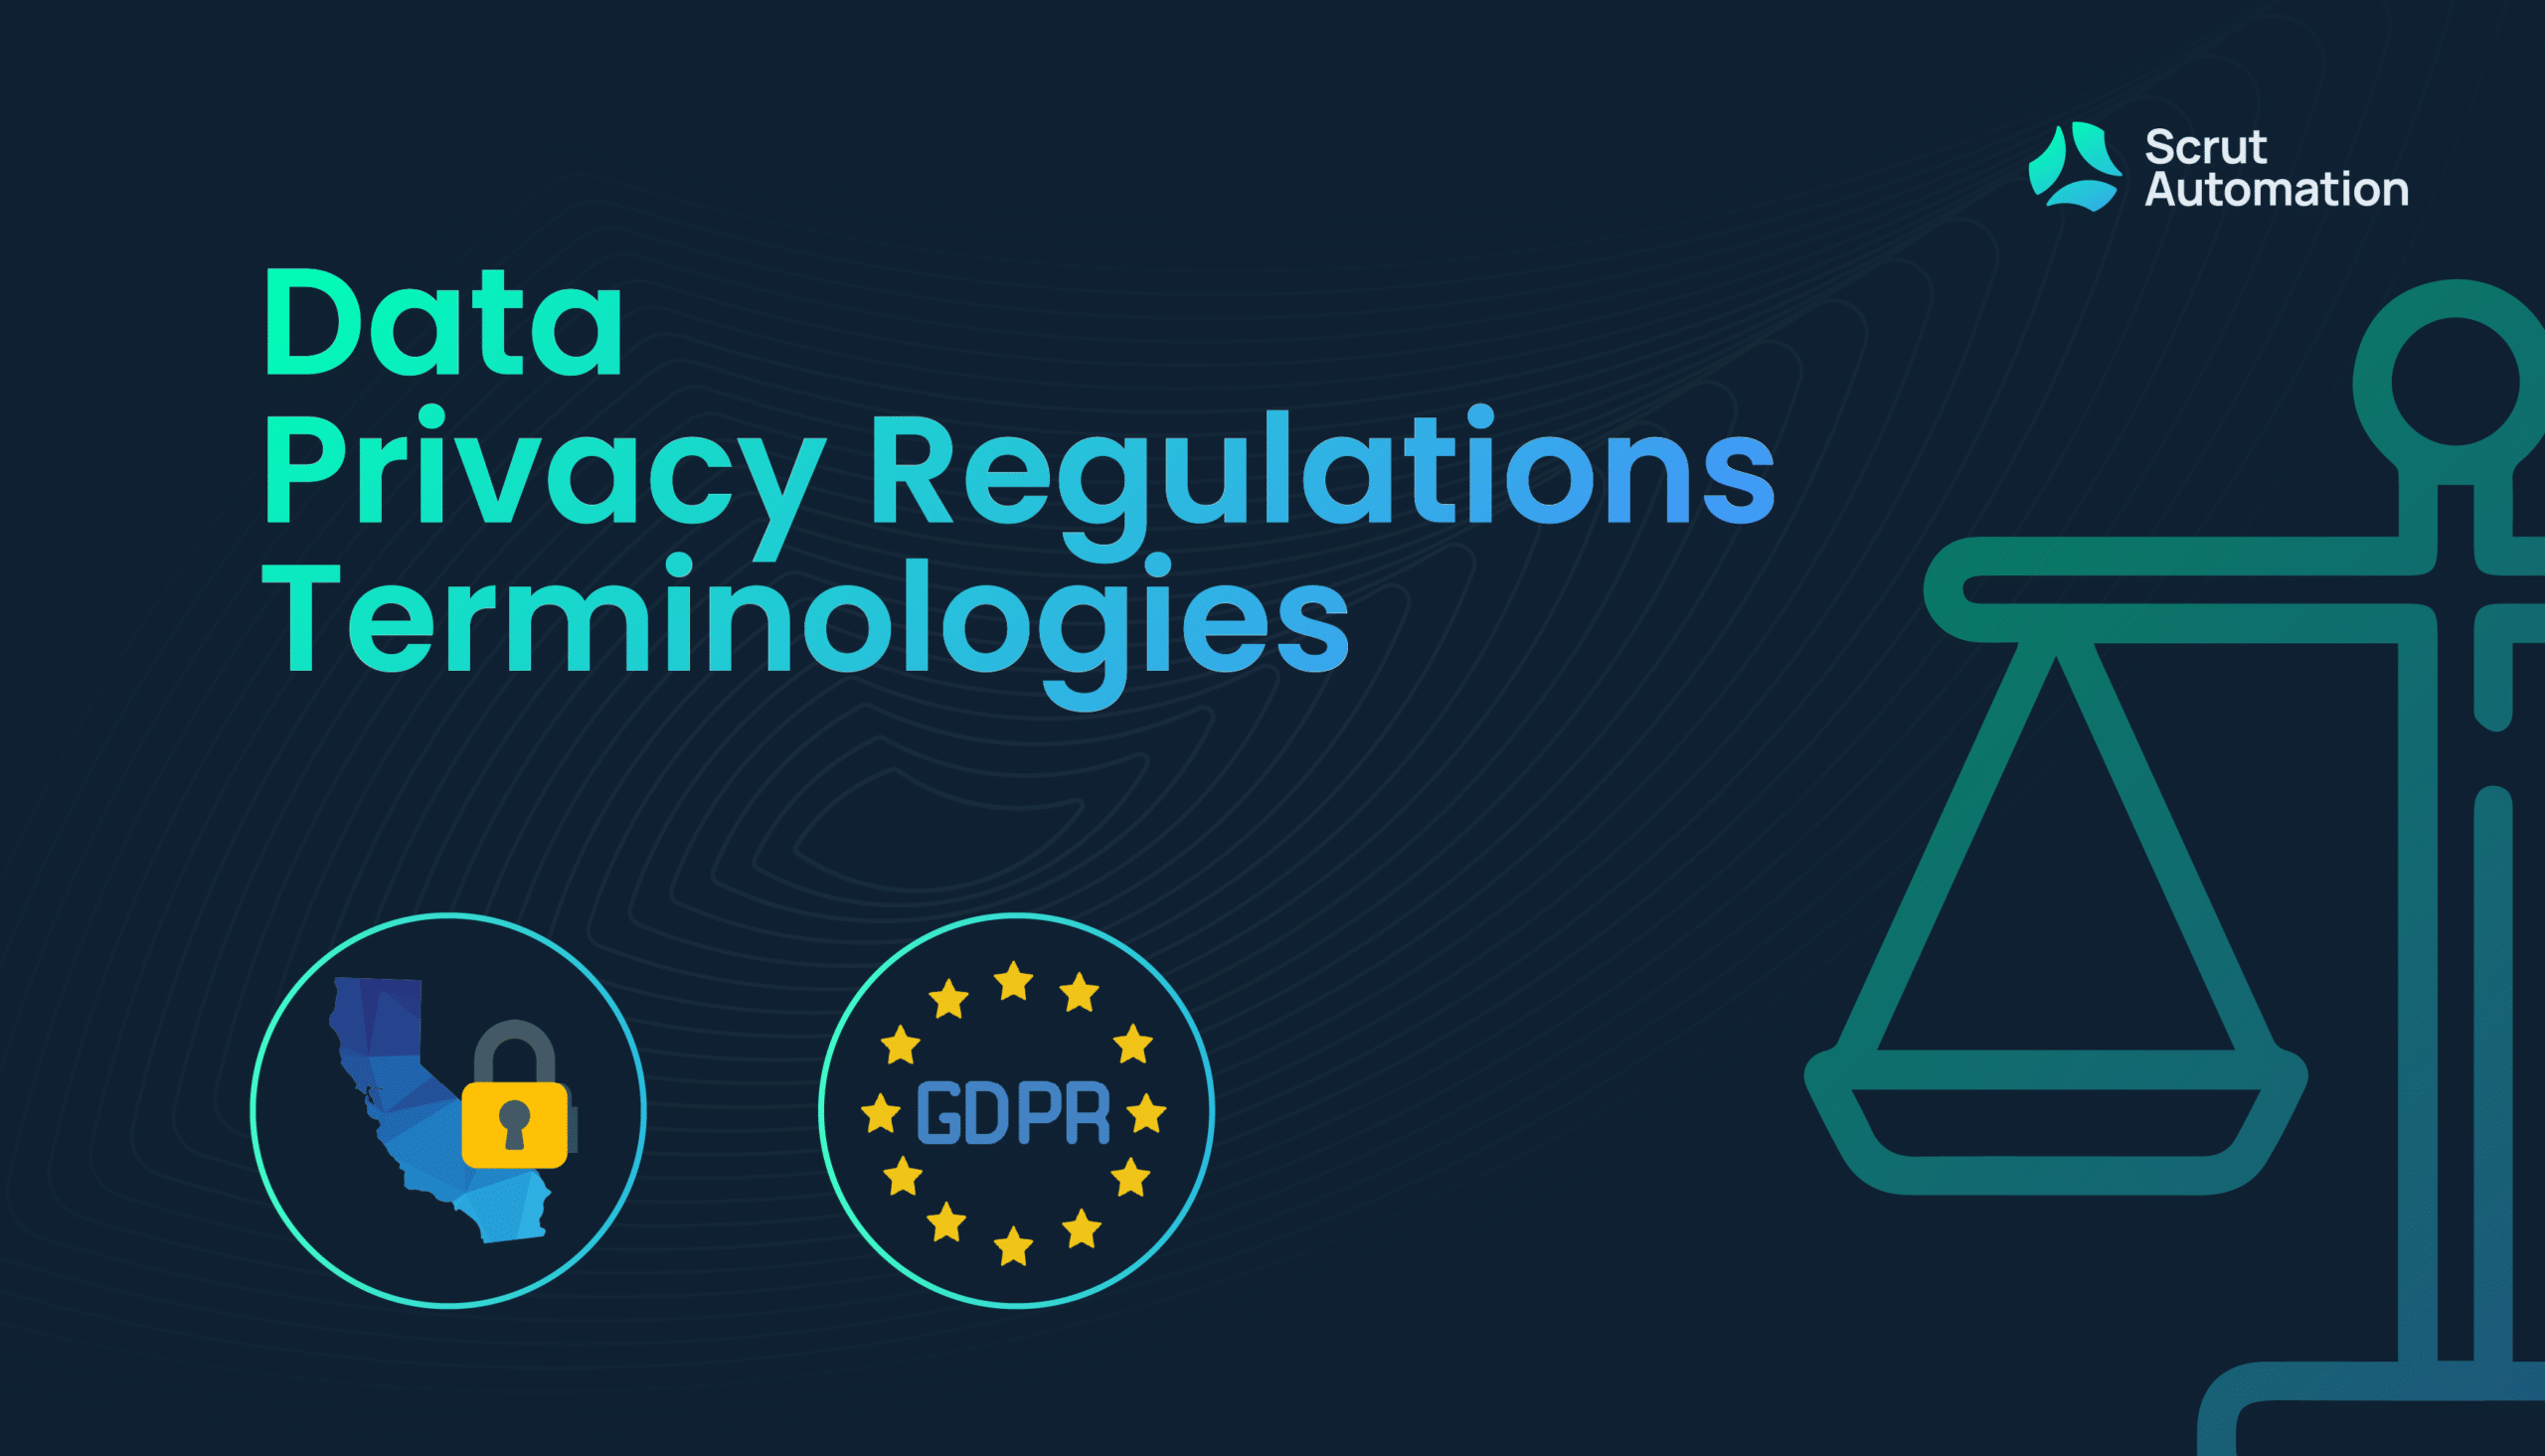 Data privacy regulation terminology